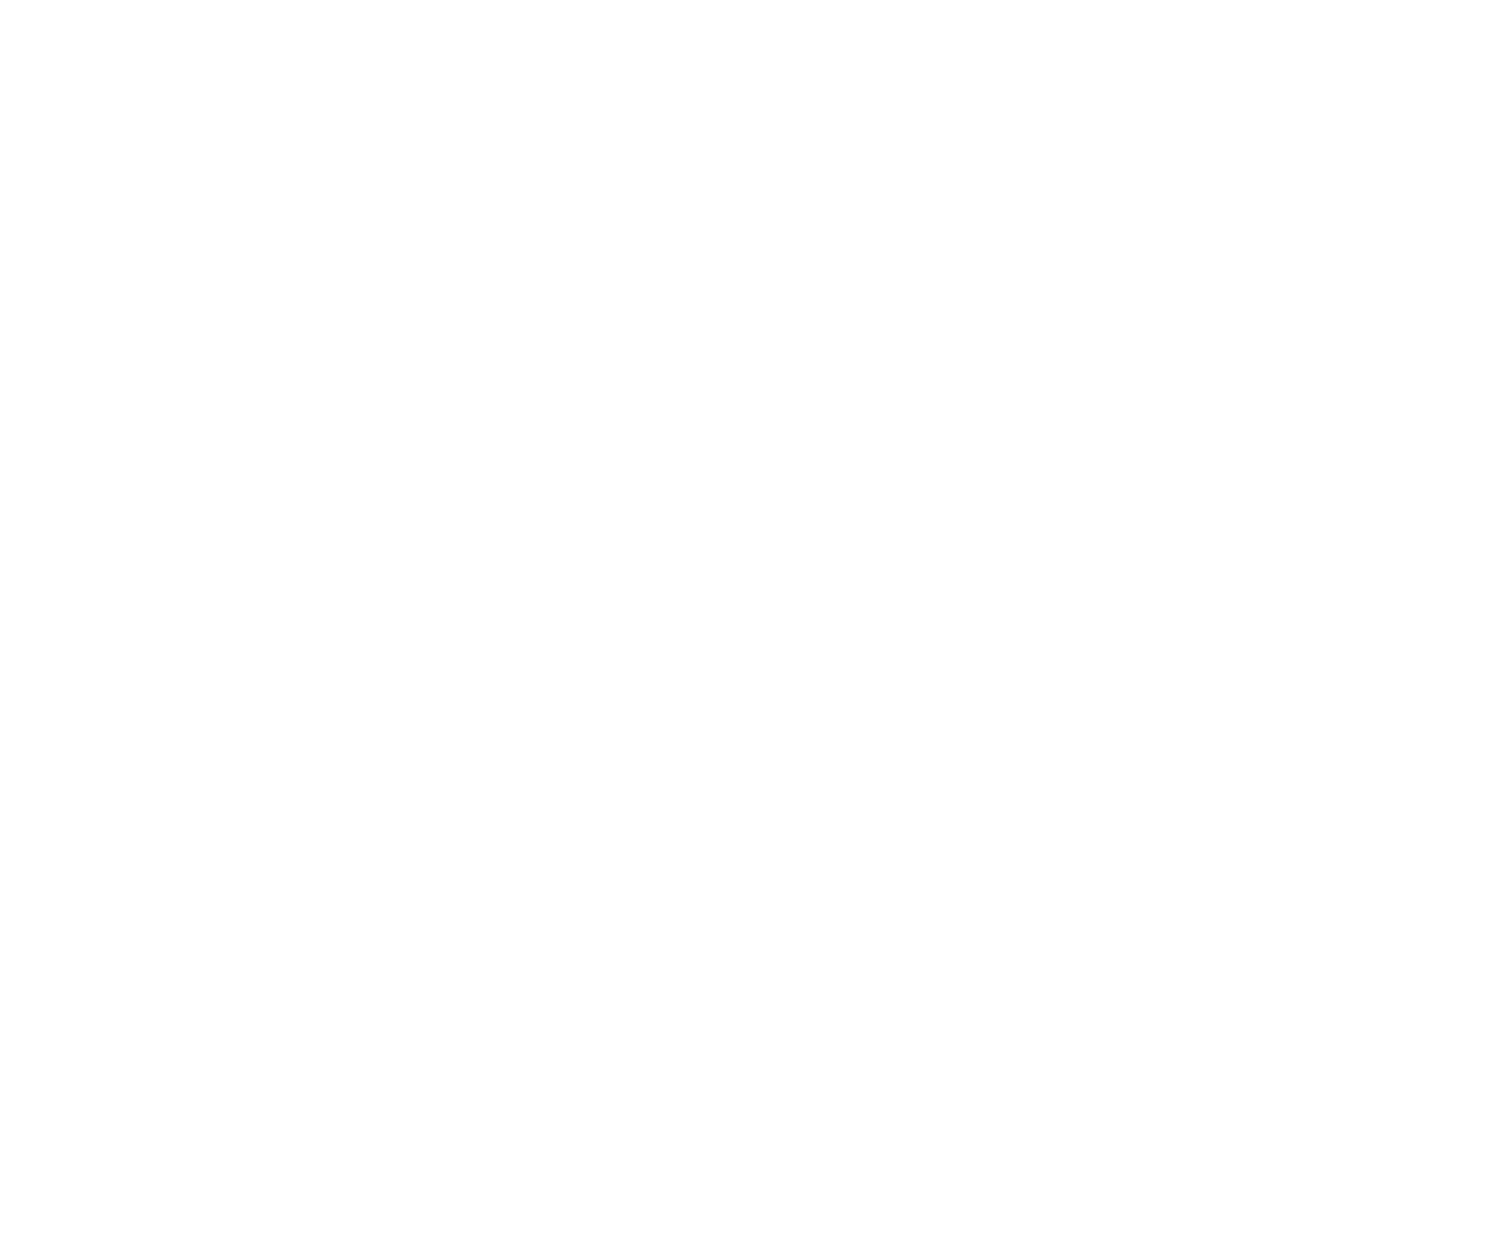 TD APPRAISAL